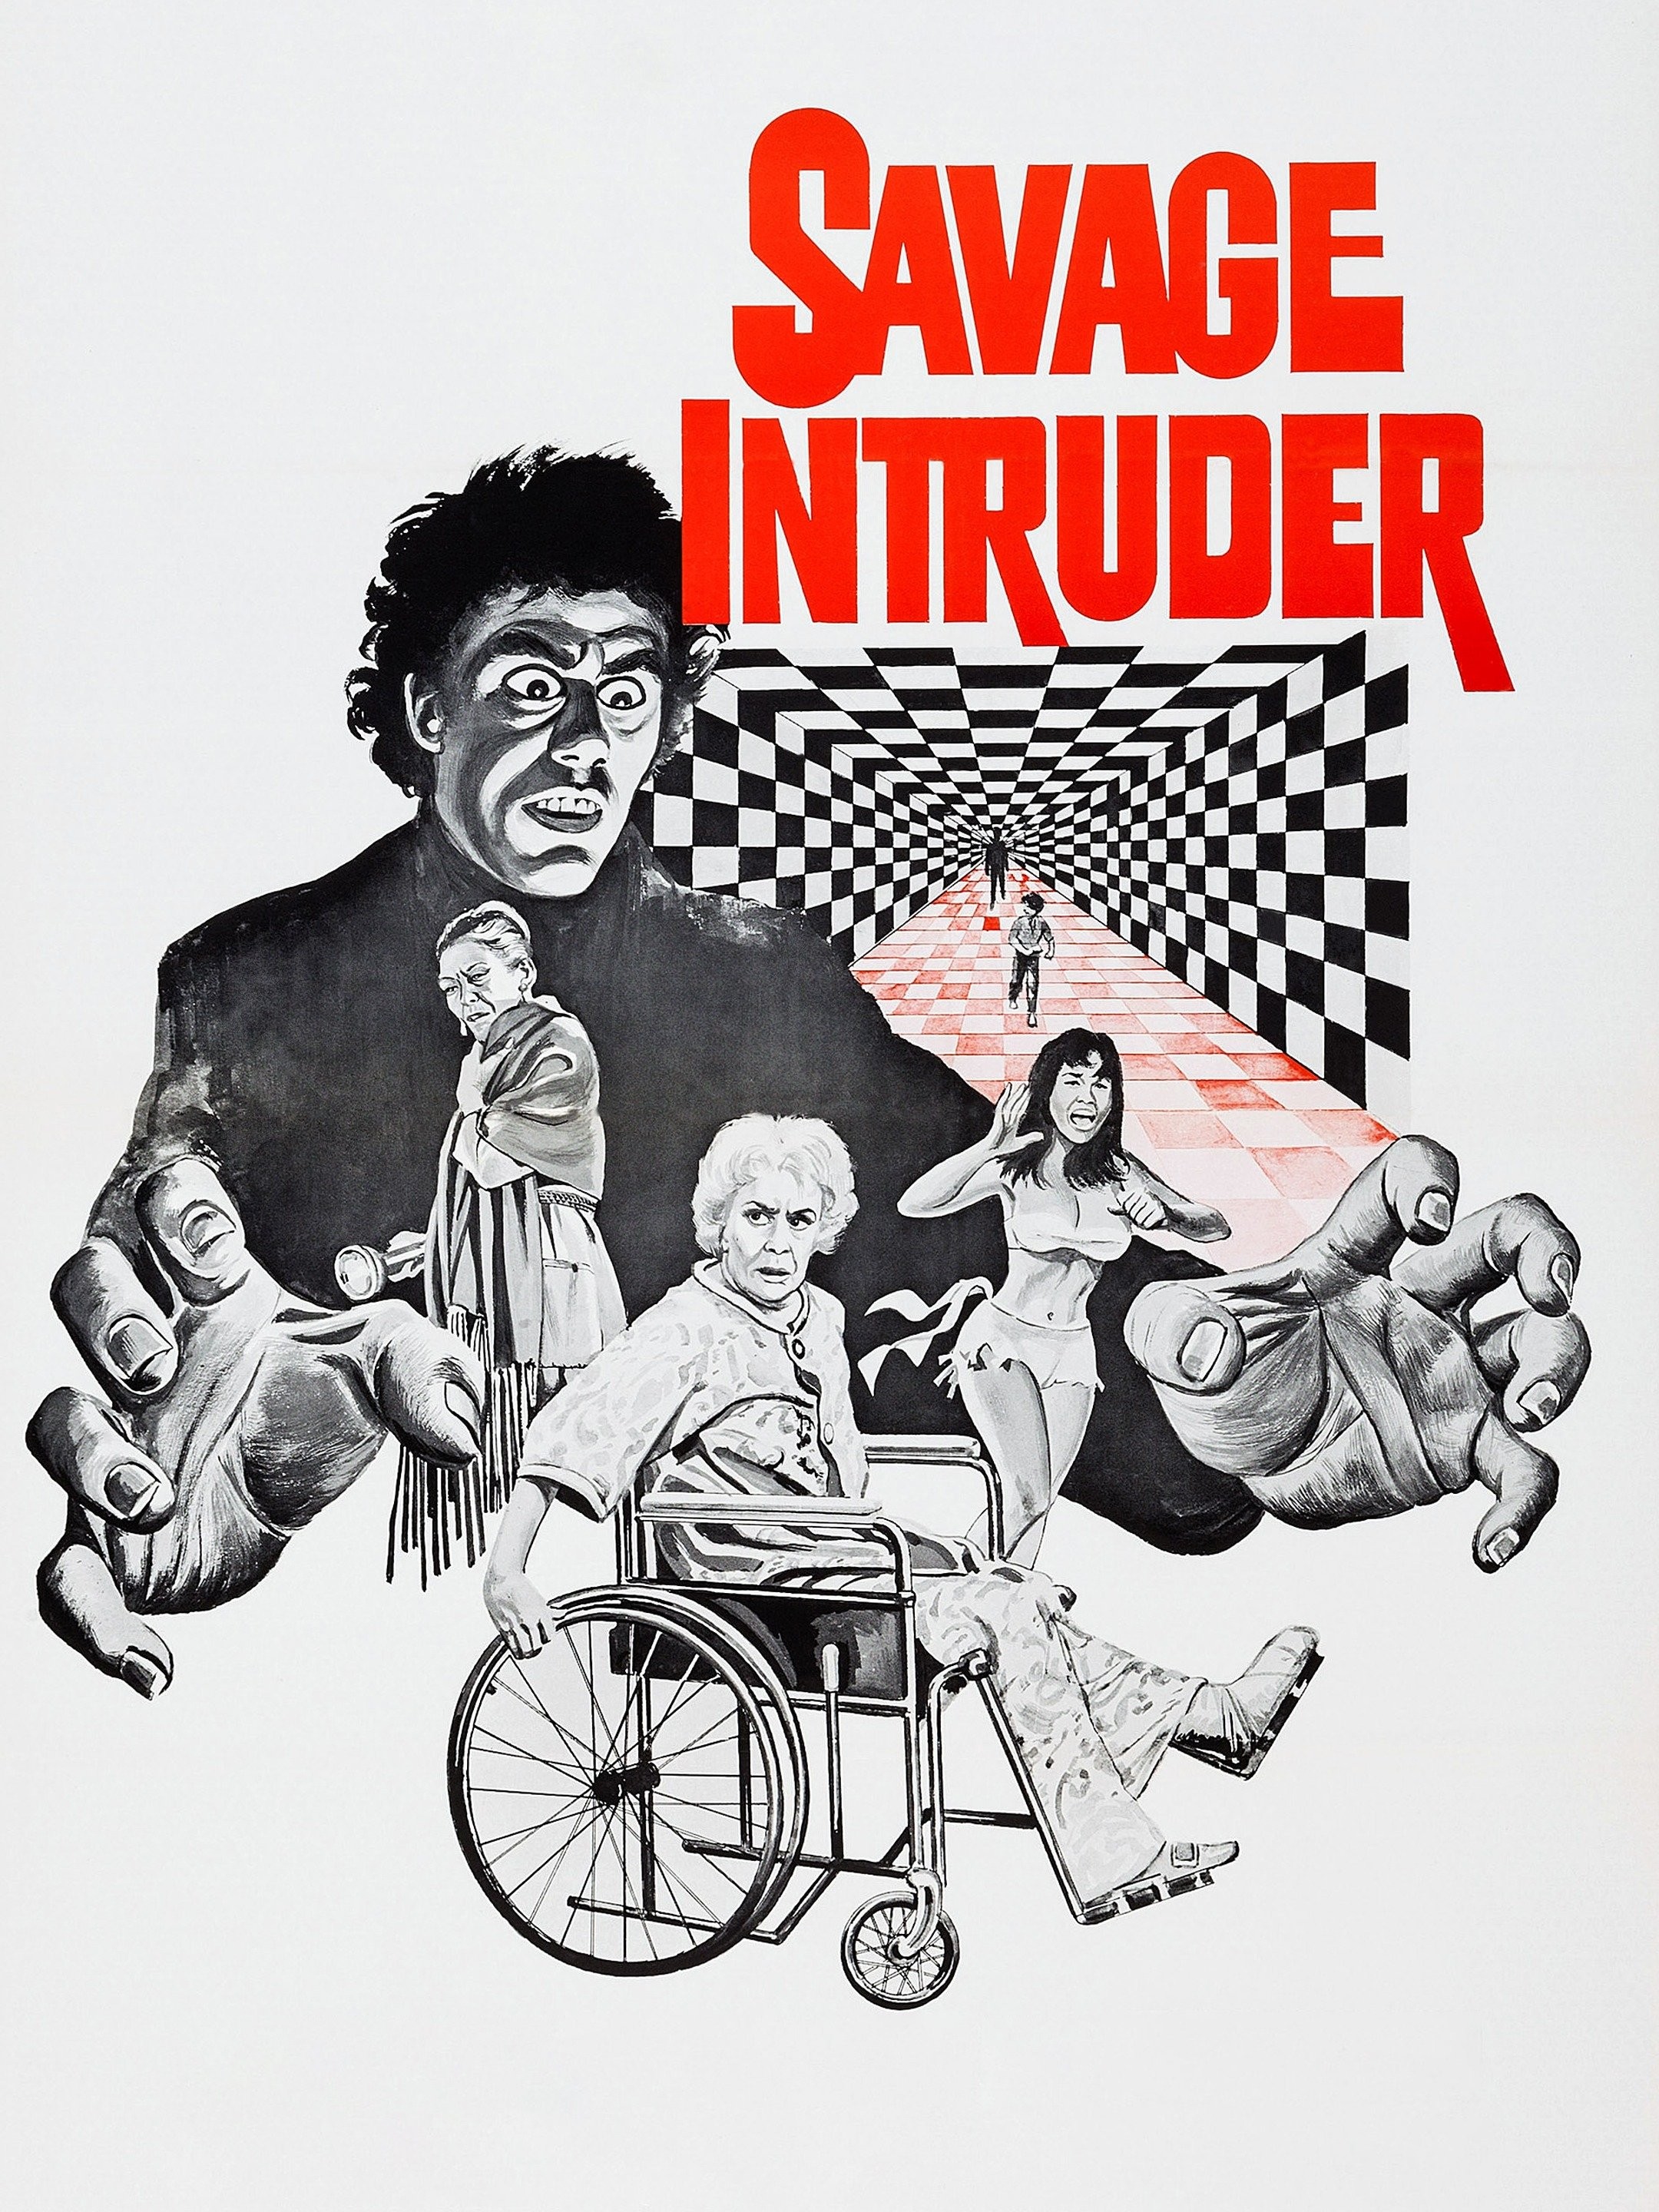 Intruder - Rotten Tomatoes